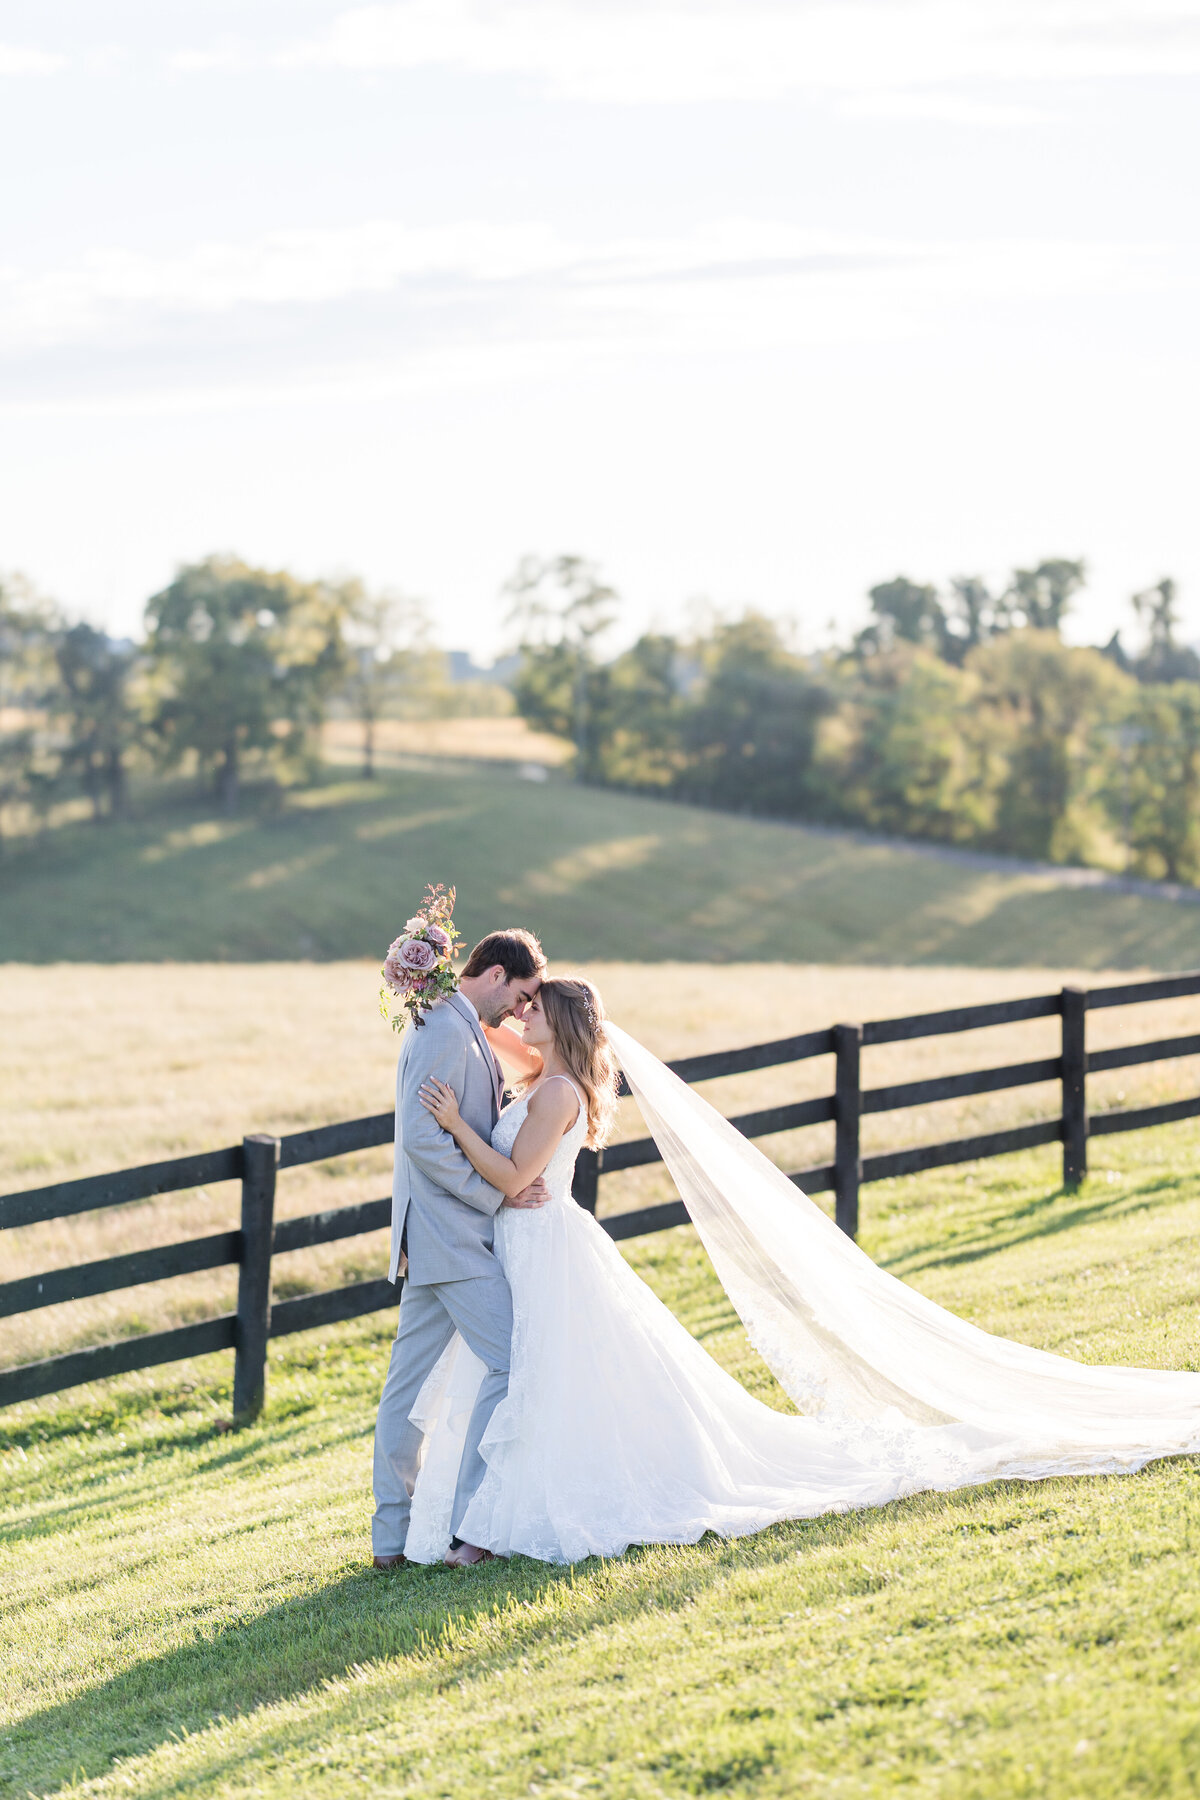 Kelsie & Marc Wedding - Taylor'd Southern Events - Maryland Wedding Photographer -28289